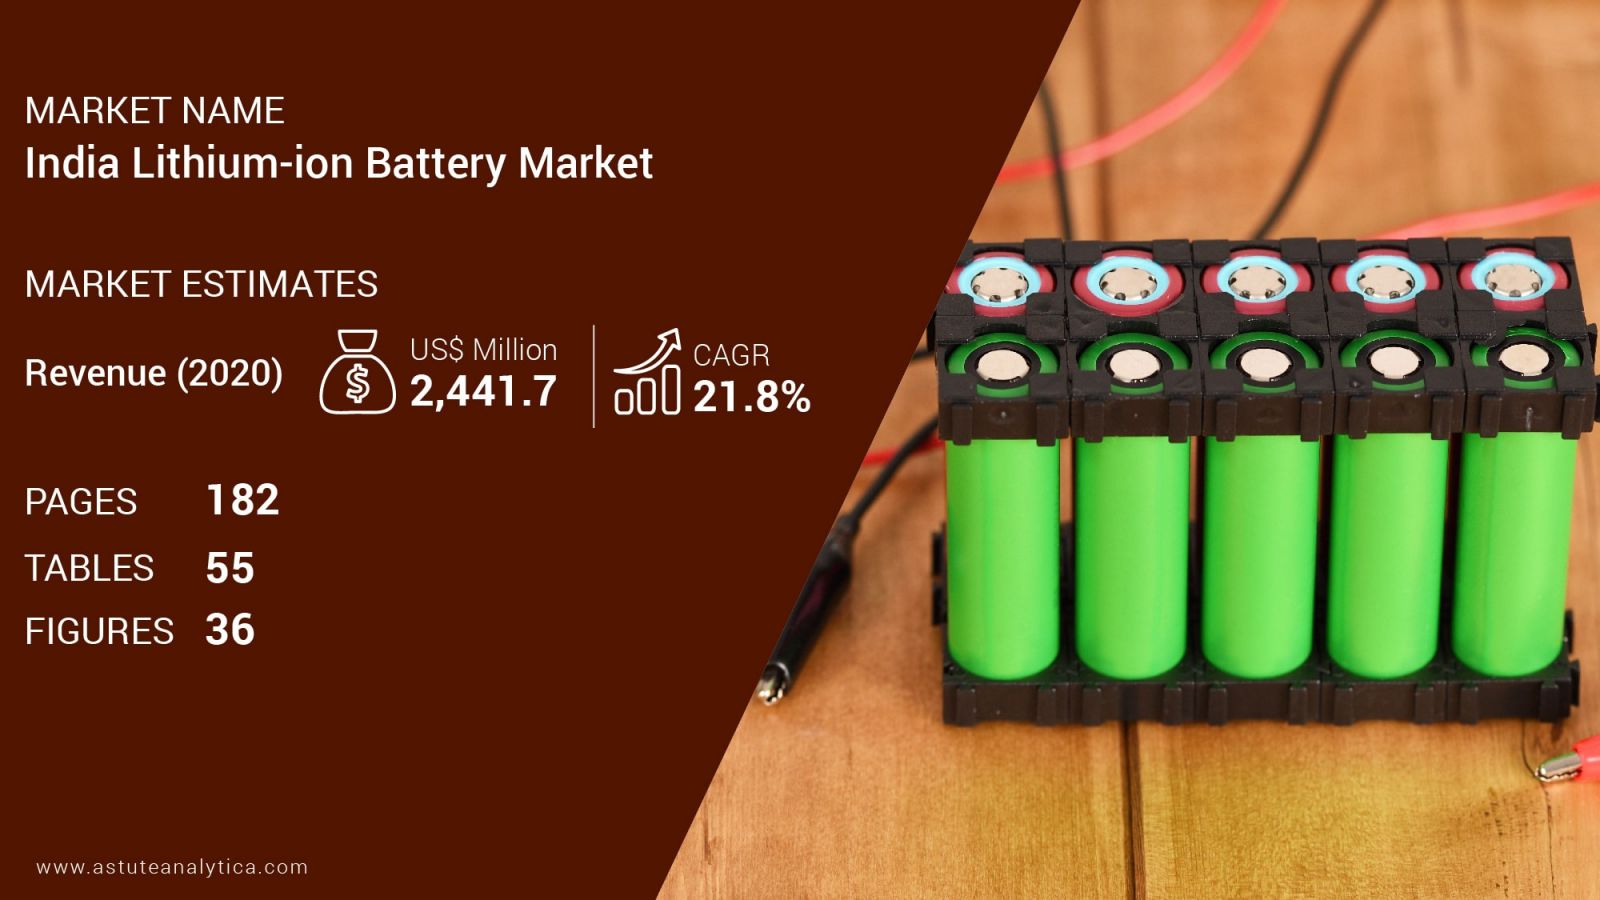 India Lithium-ion Battery Market Scope